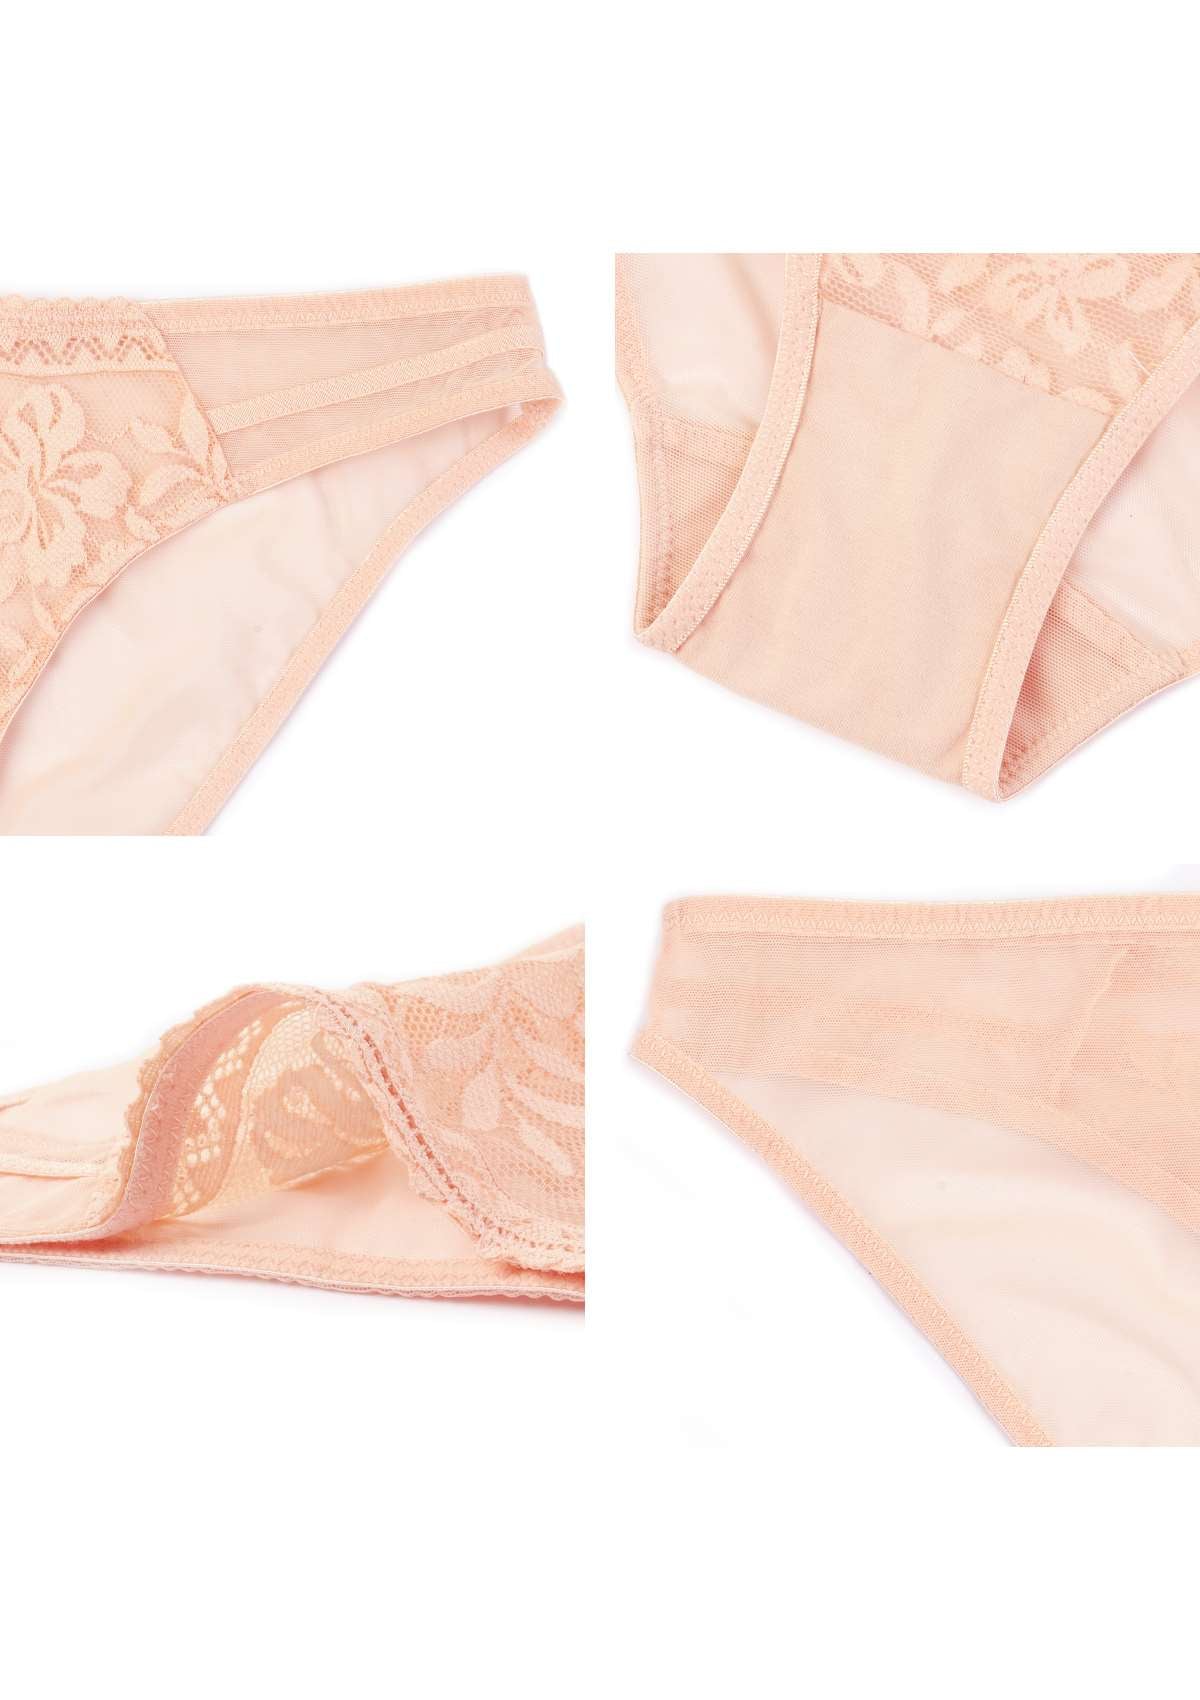 HSIA Gladioli Floral Lace Mesh Airy Elegant Beautiful Bikini Underwear - M / Peach